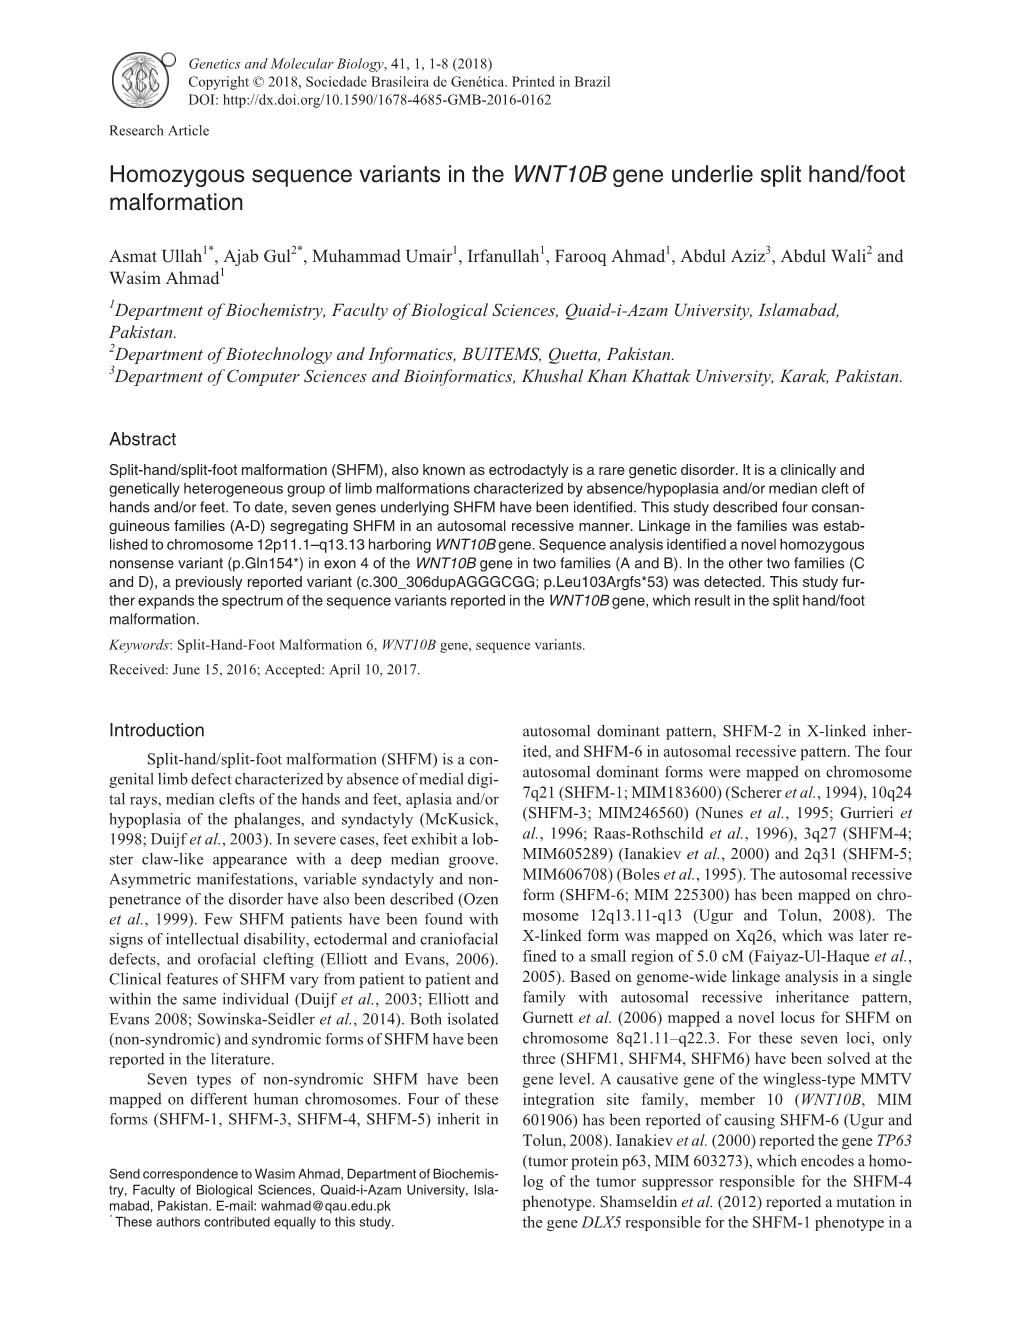 Homozygous Sequence Variants in the WNT10B Gene Underlie Split Hand/Foot Malformation